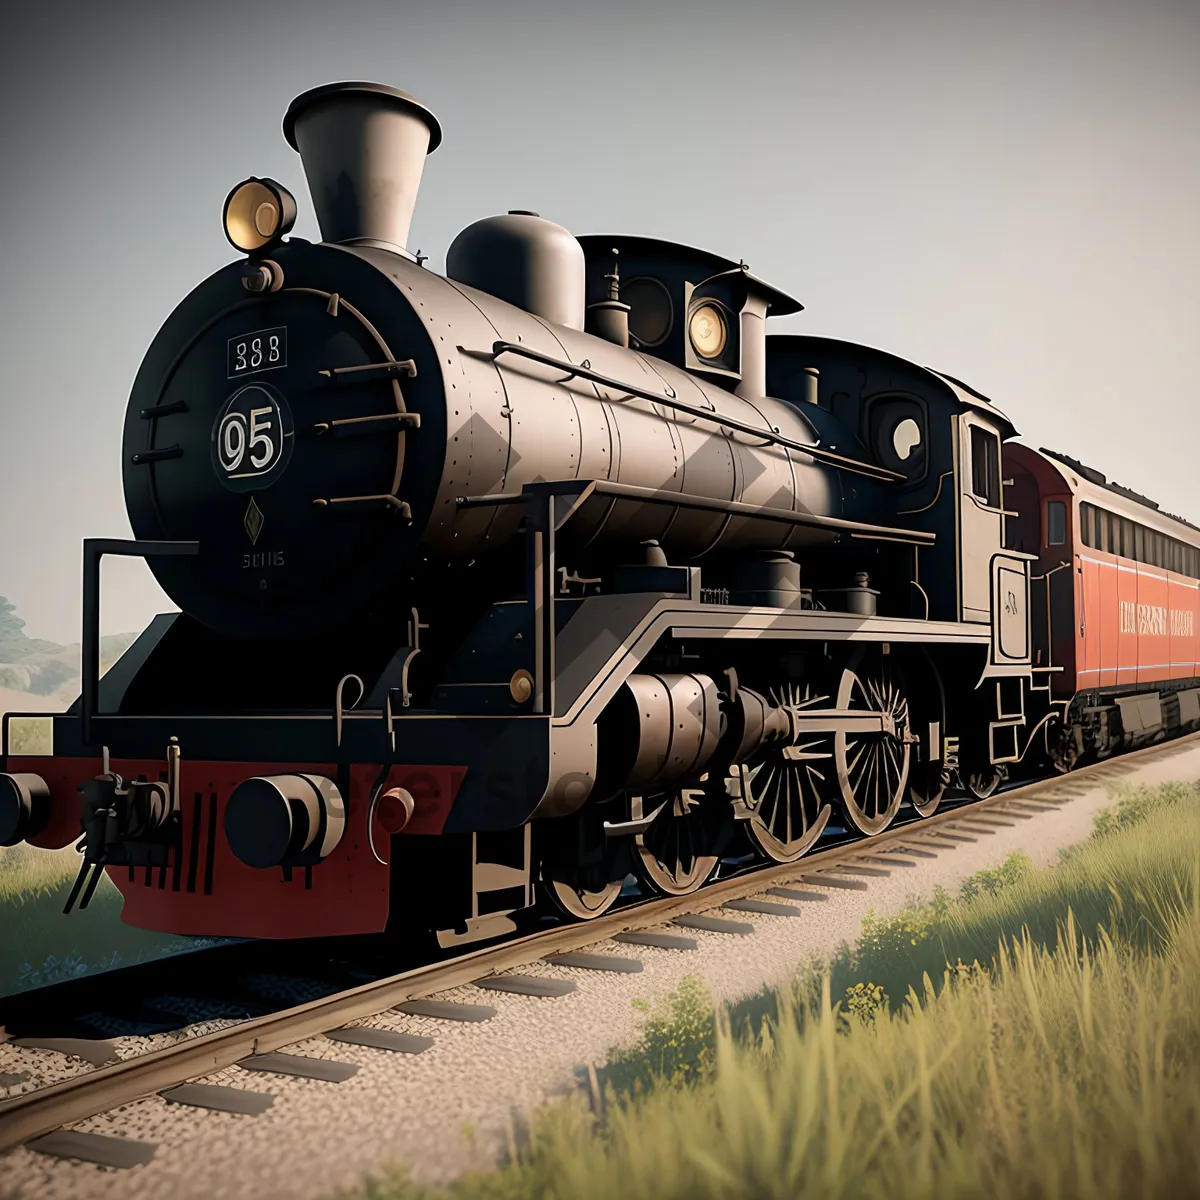 Picture of Vintage Steam Locomotive on Railroad Tracks